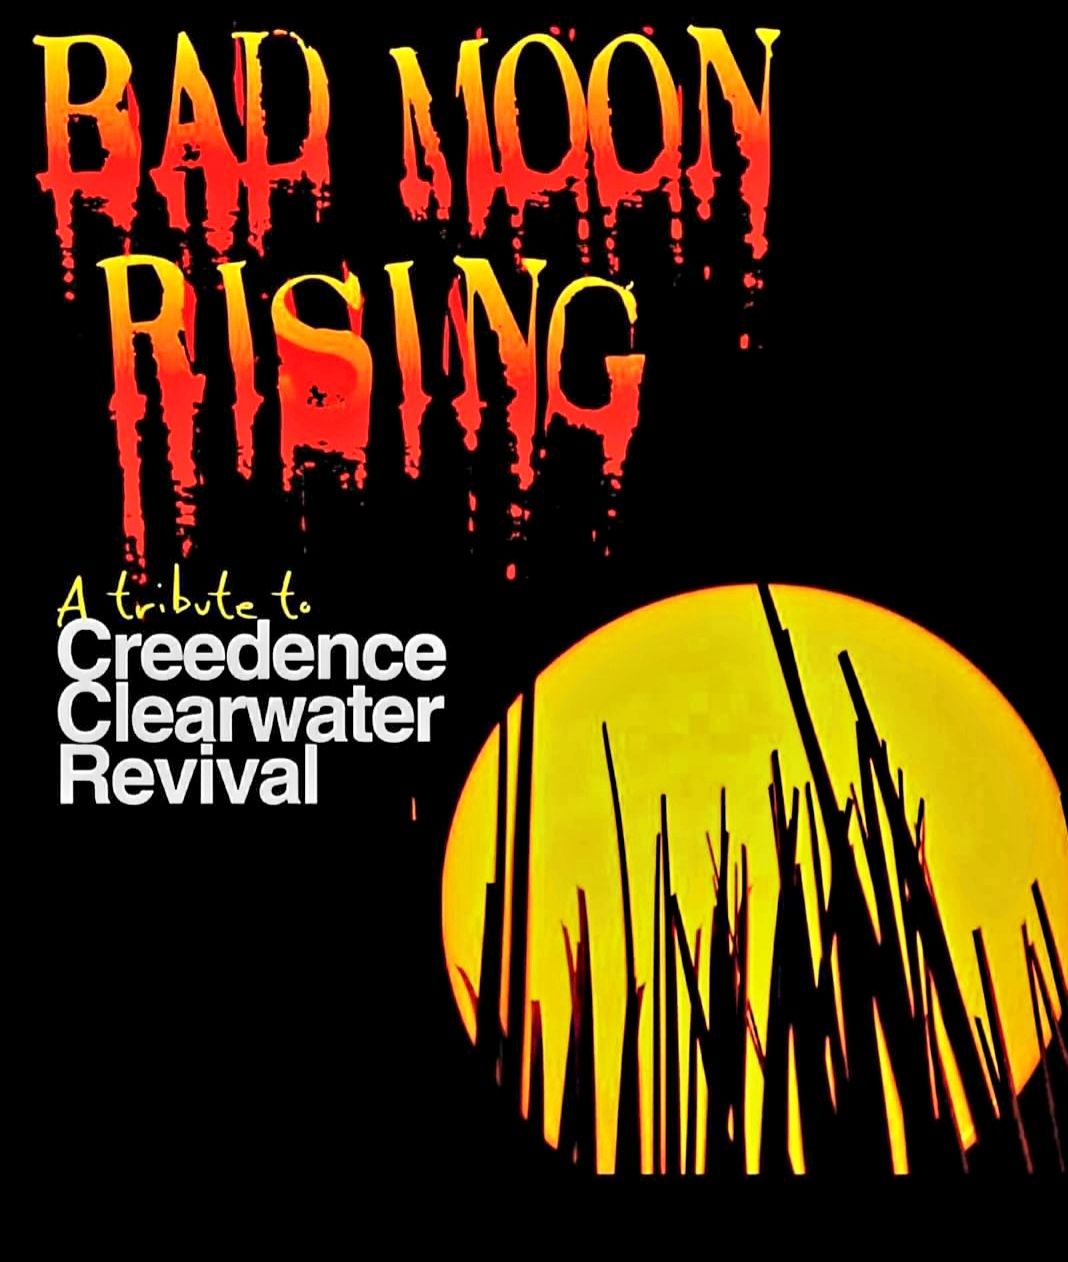 Creedance "Bad Moon Rising